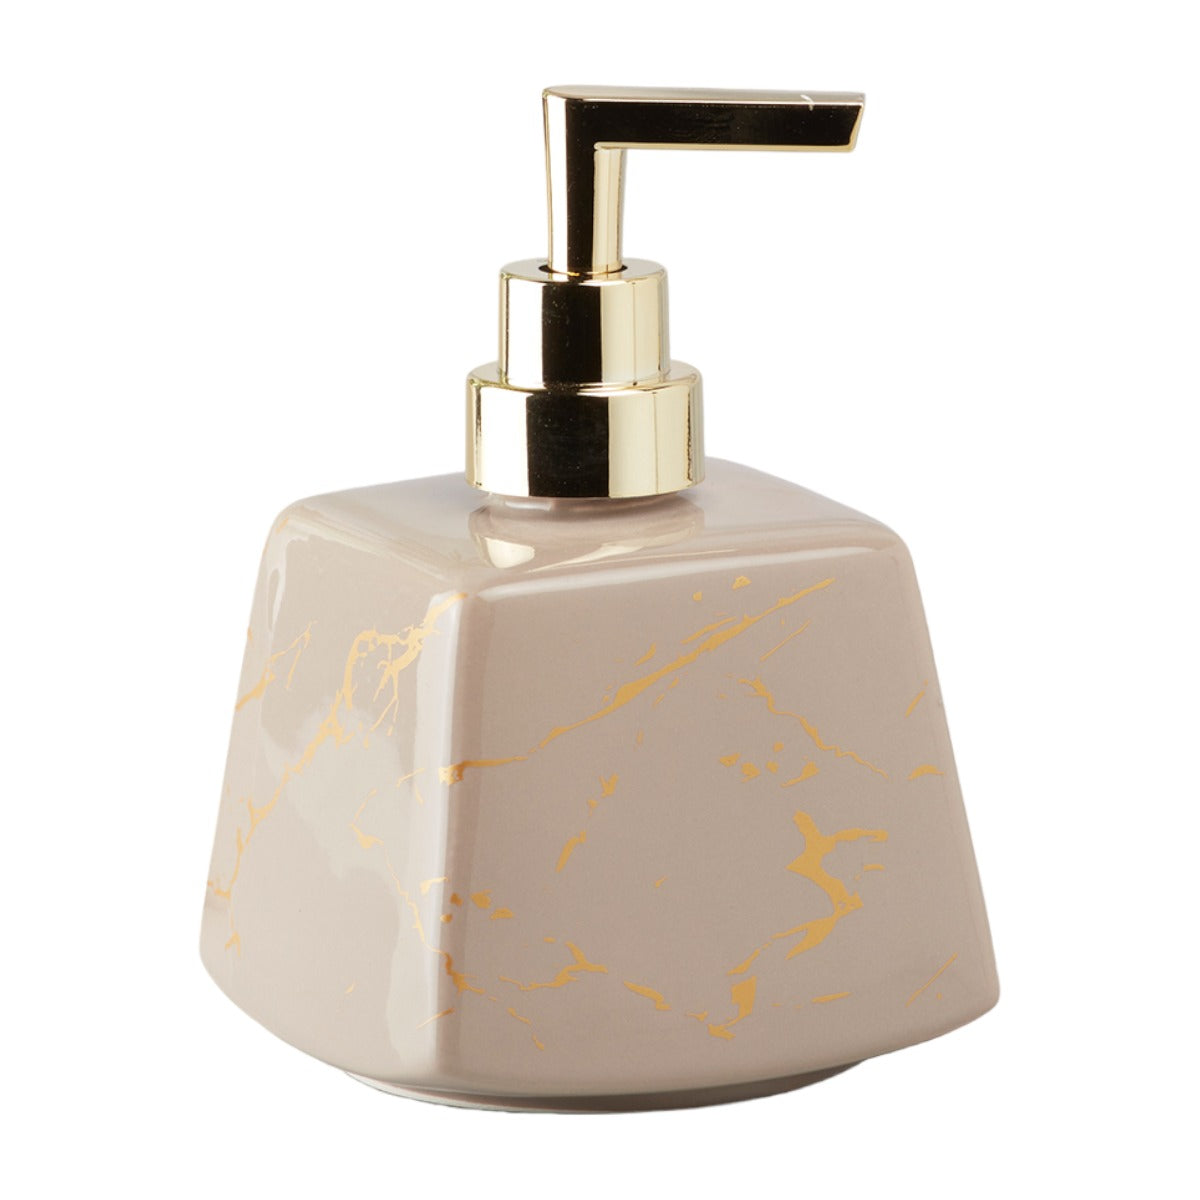 Ceramic Soap Dispenser handwash Pump for Bathroom, Set of 1, Grey/Gold (10152)